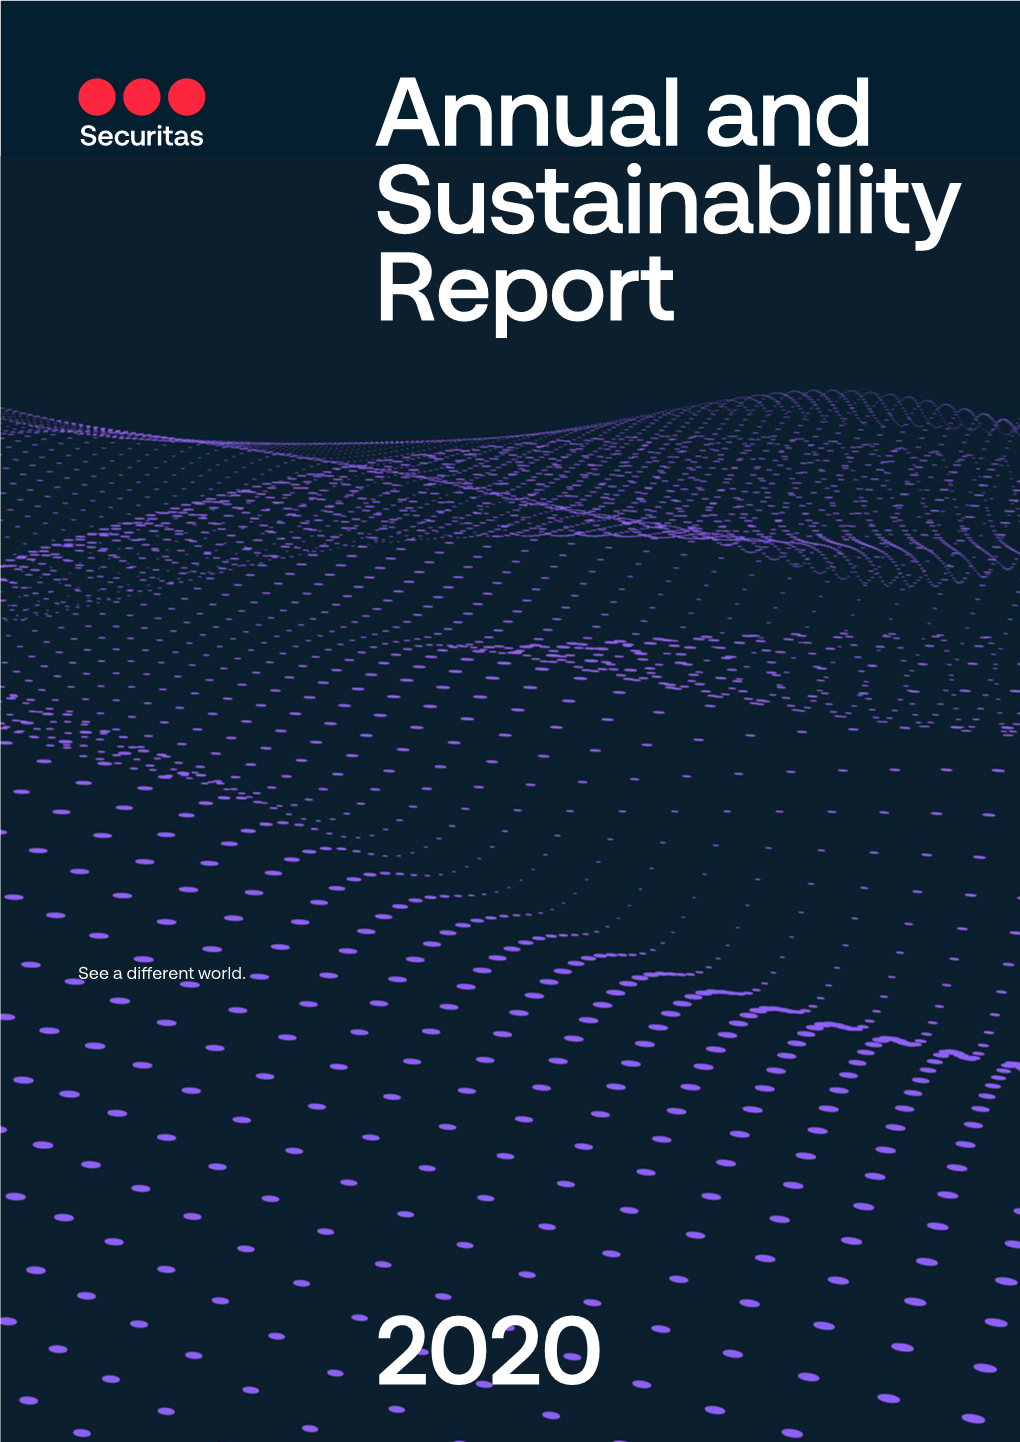 Securitas – Annual and Sustainability Report 2020